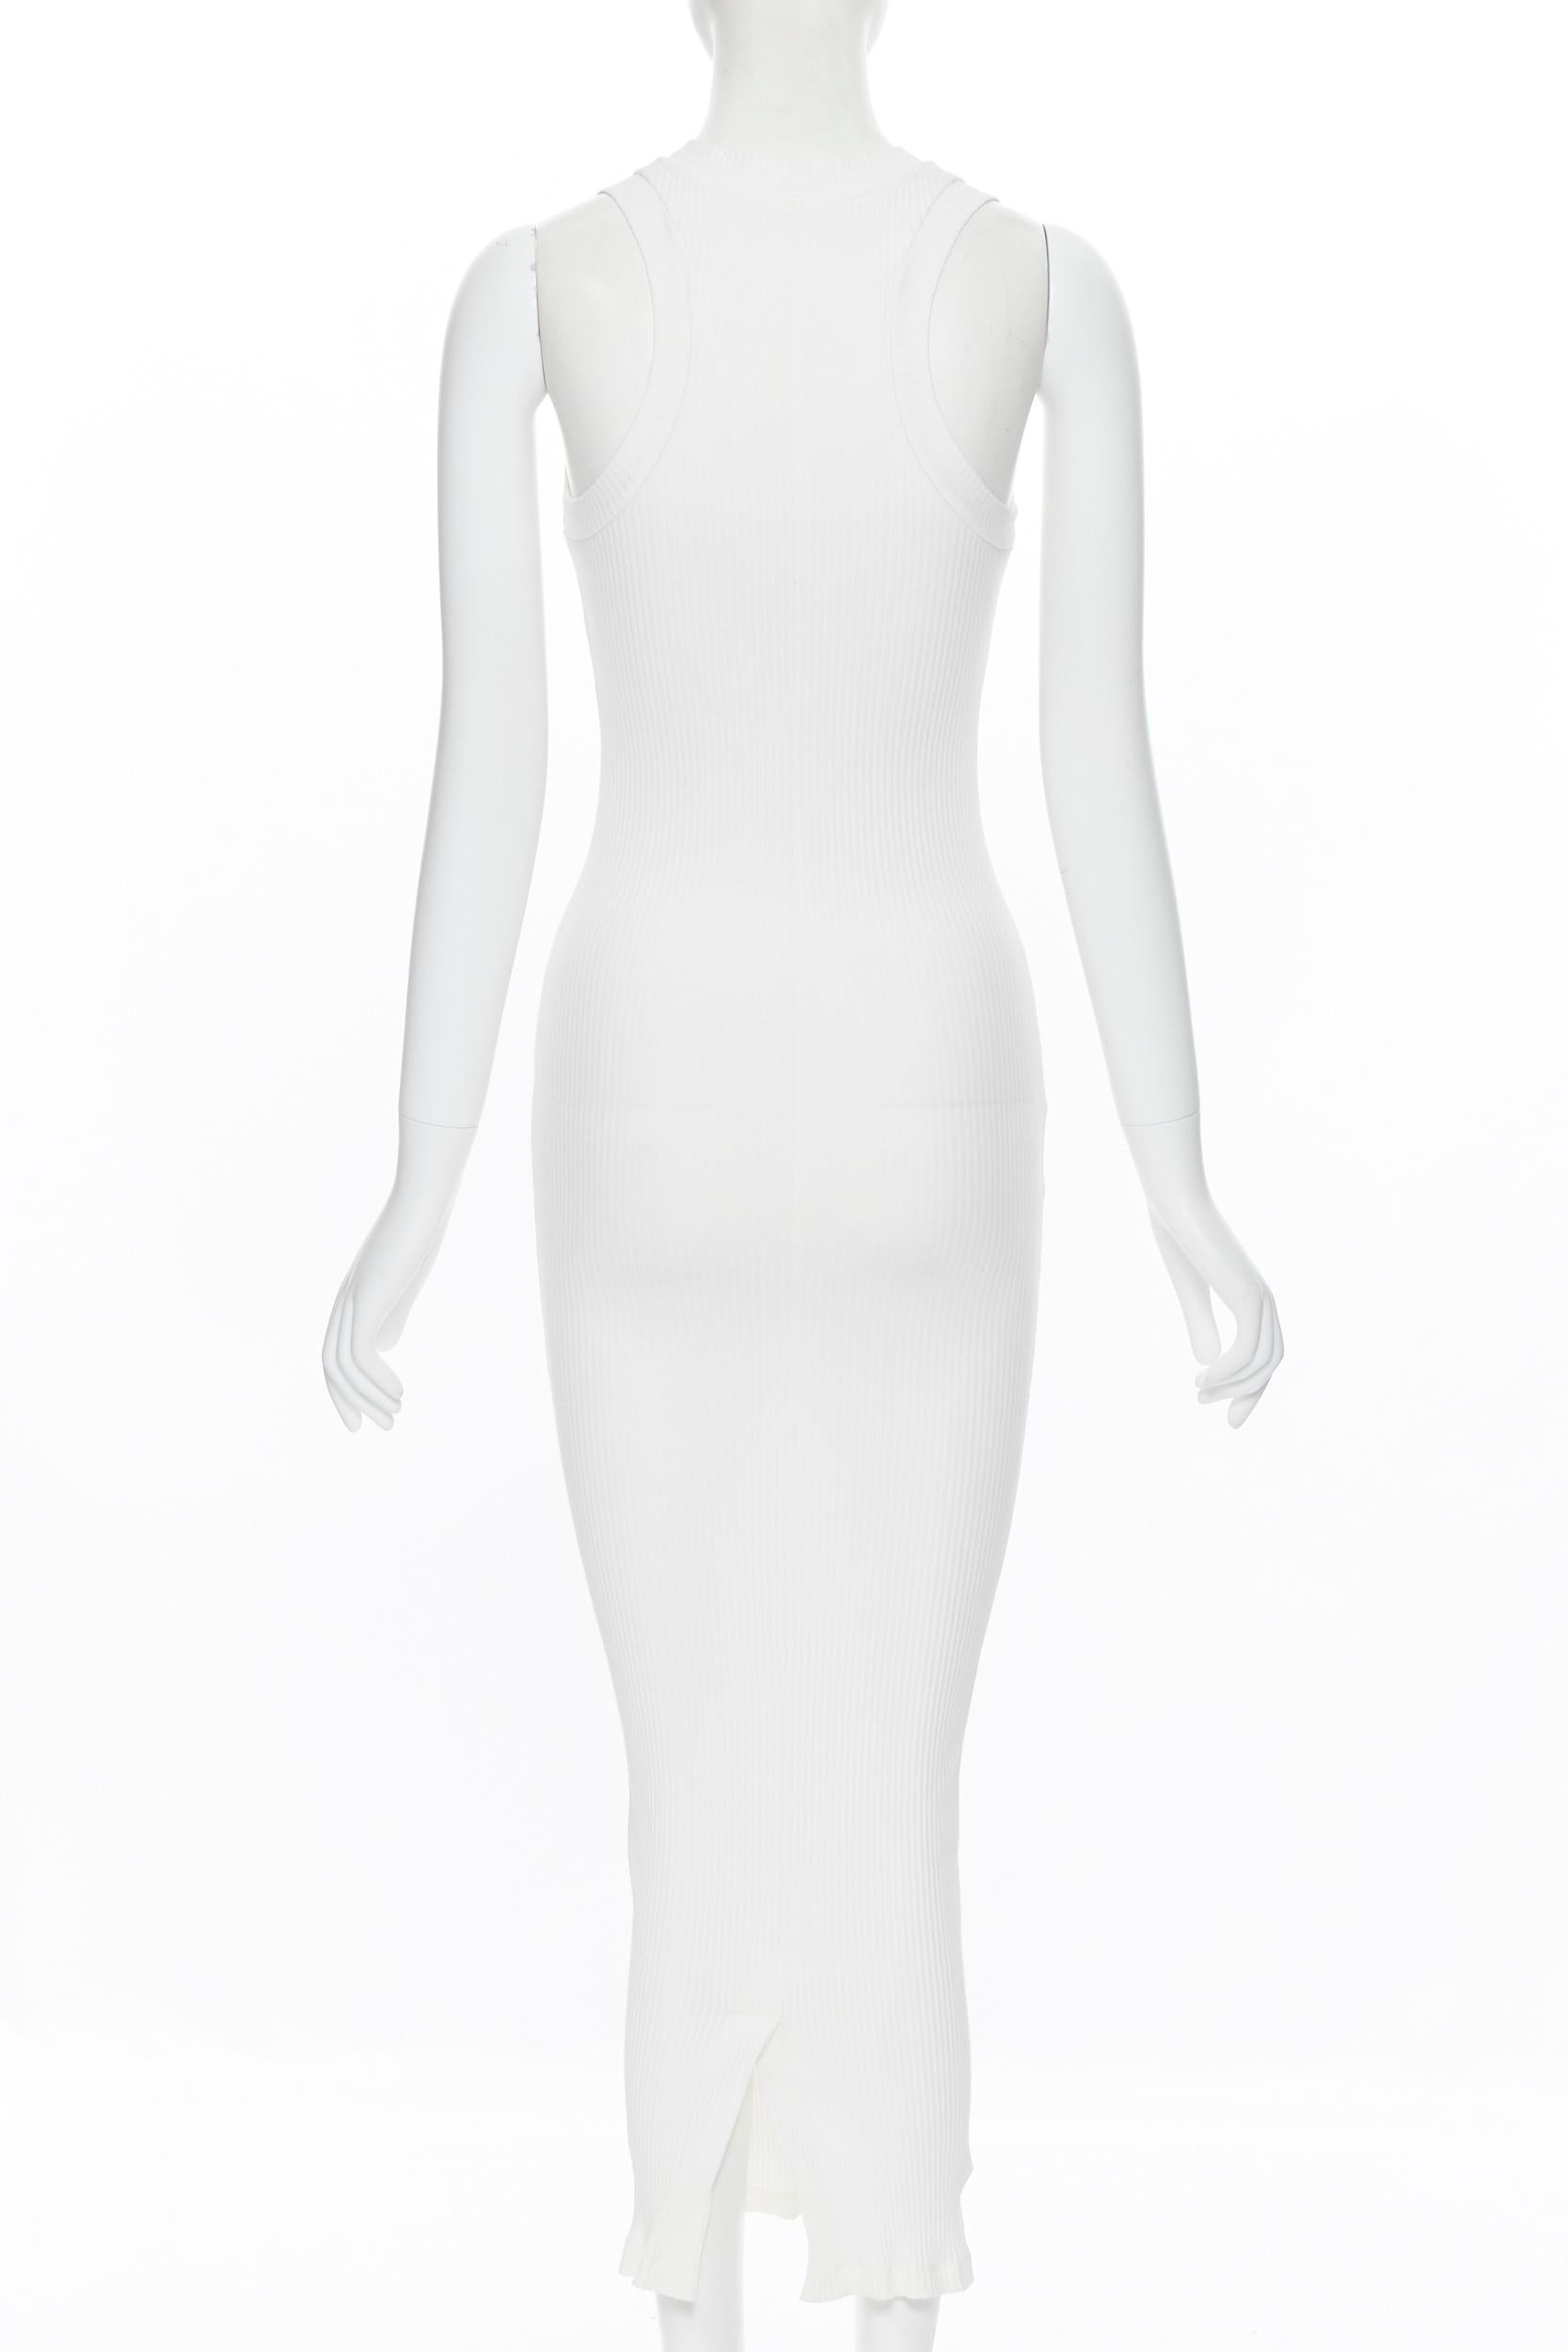 White MR LARKIN ivory white ribbed stretch fit minimalist casual day dress XS